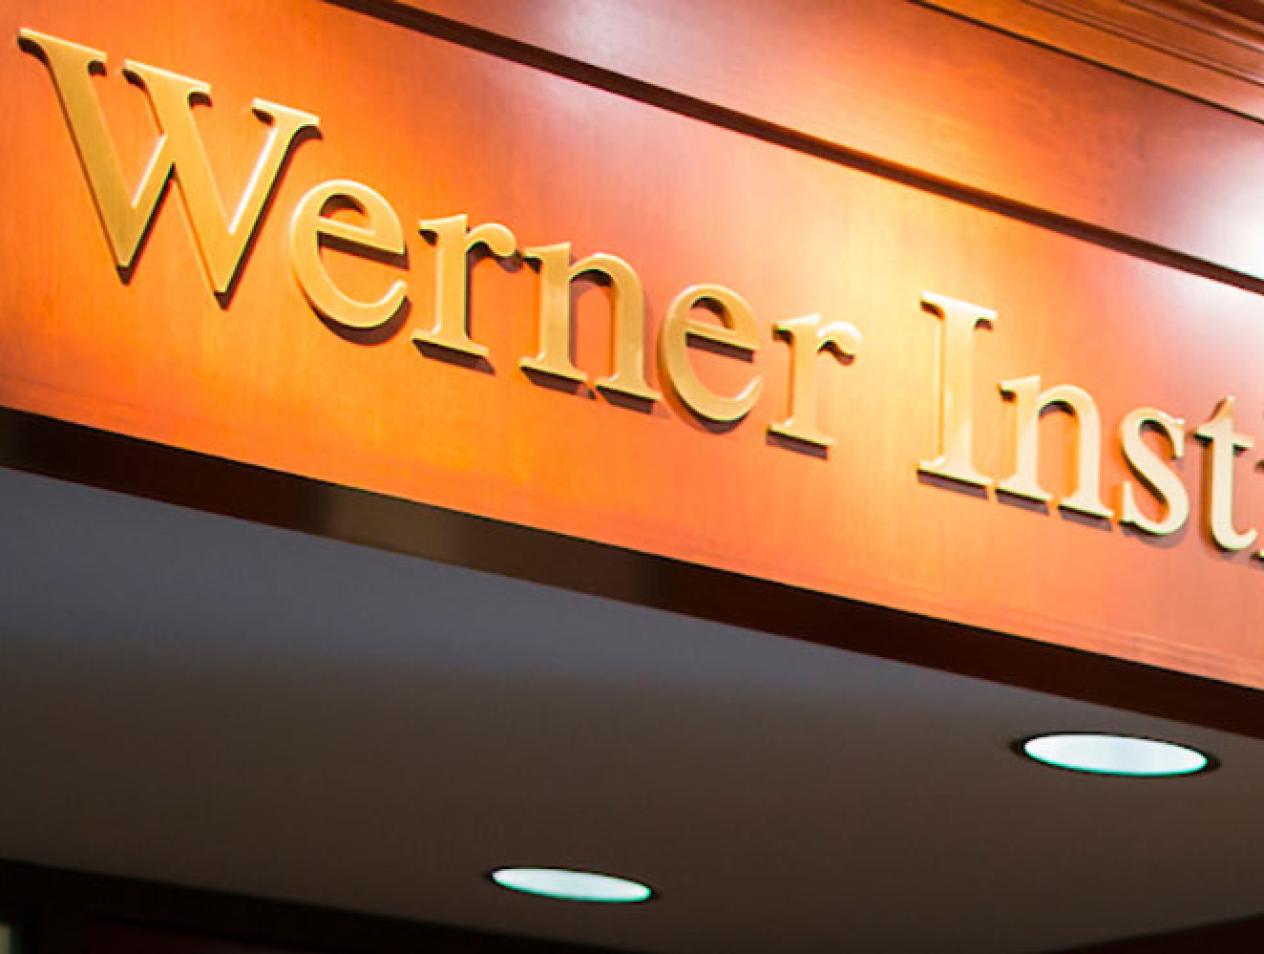 The Werner Institute